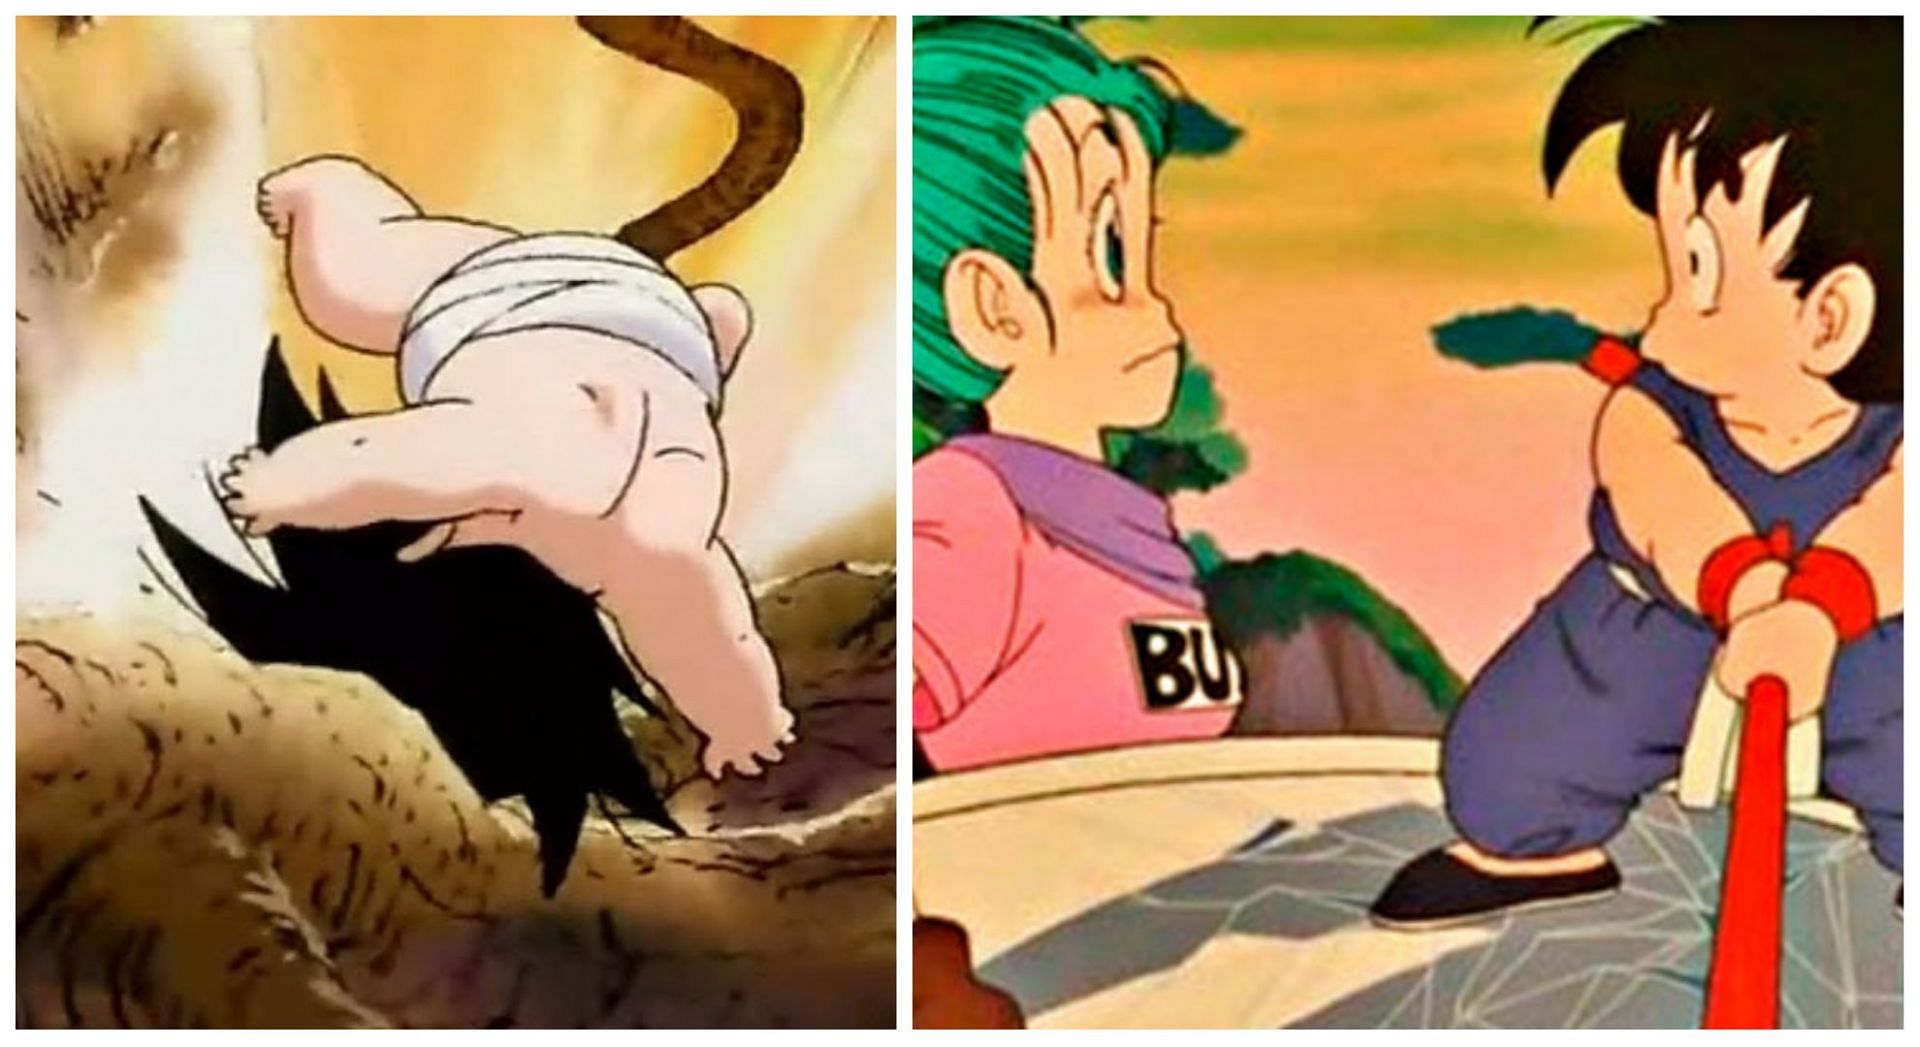 Goku bumping his head/Meeting Bulma in the anime (Image via Sportskeeda)